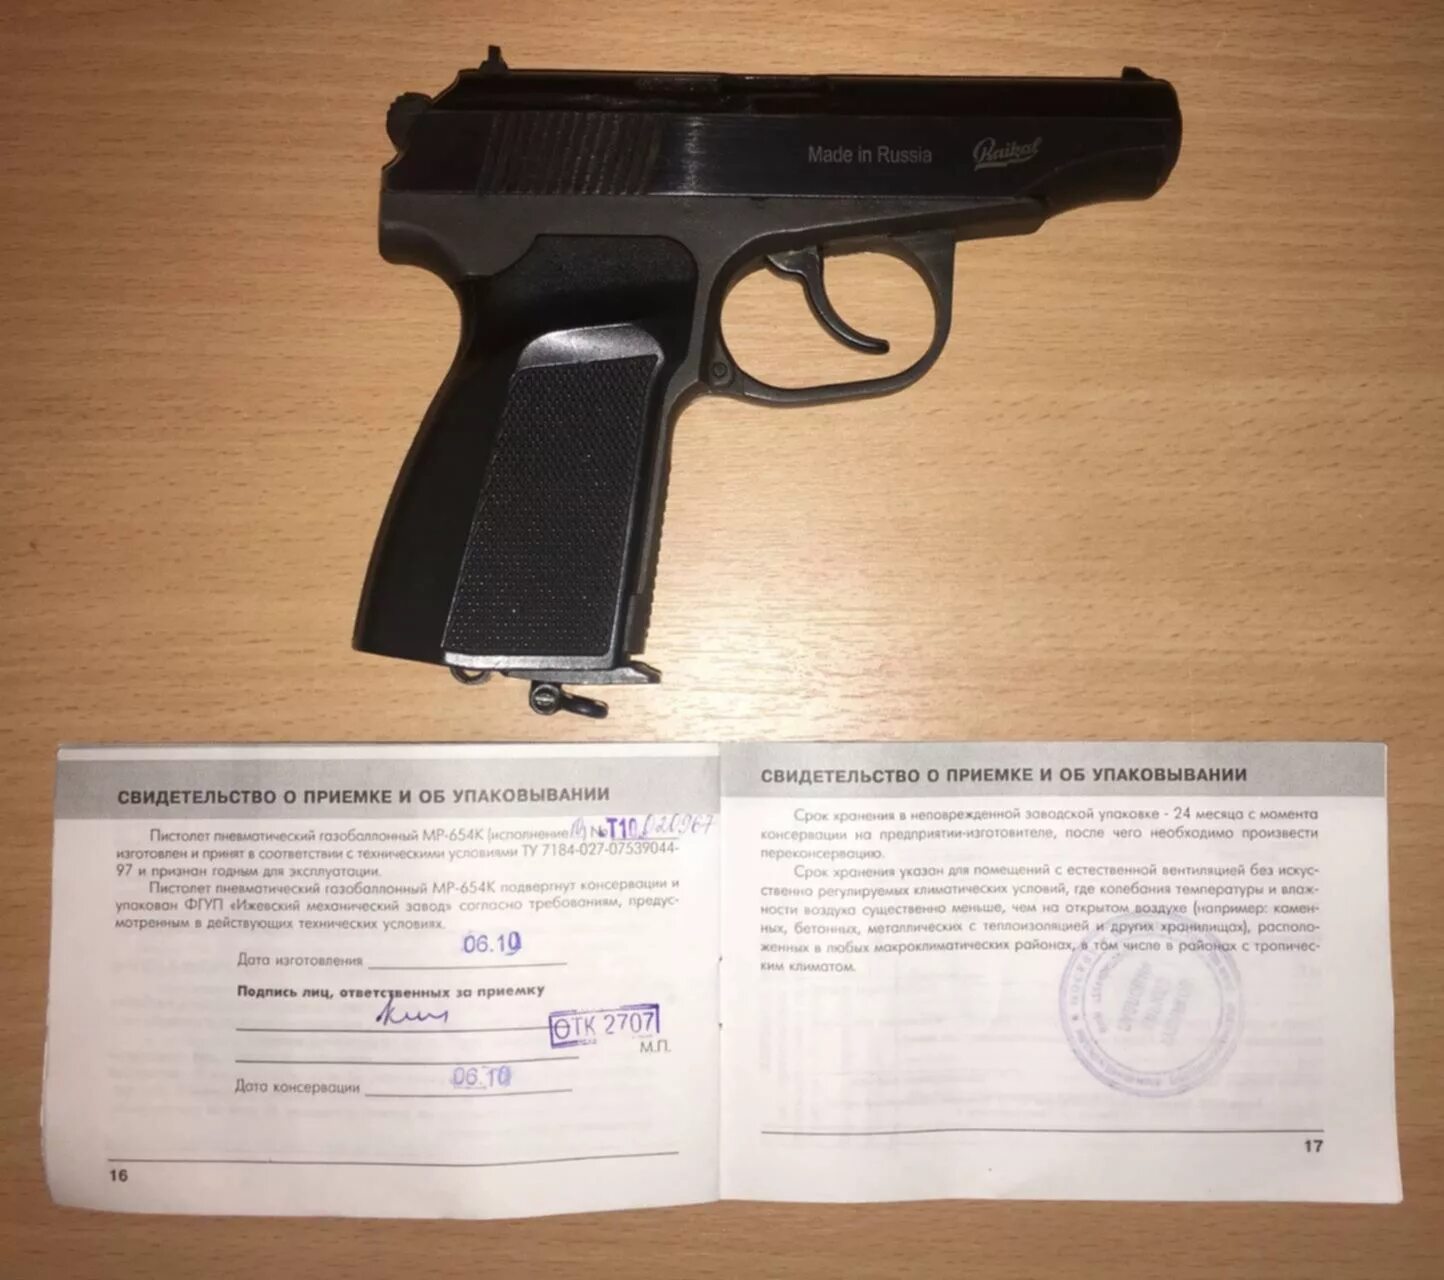 Сертификат пневмо пистолета Макарова 654к. Лицензия на пневмат